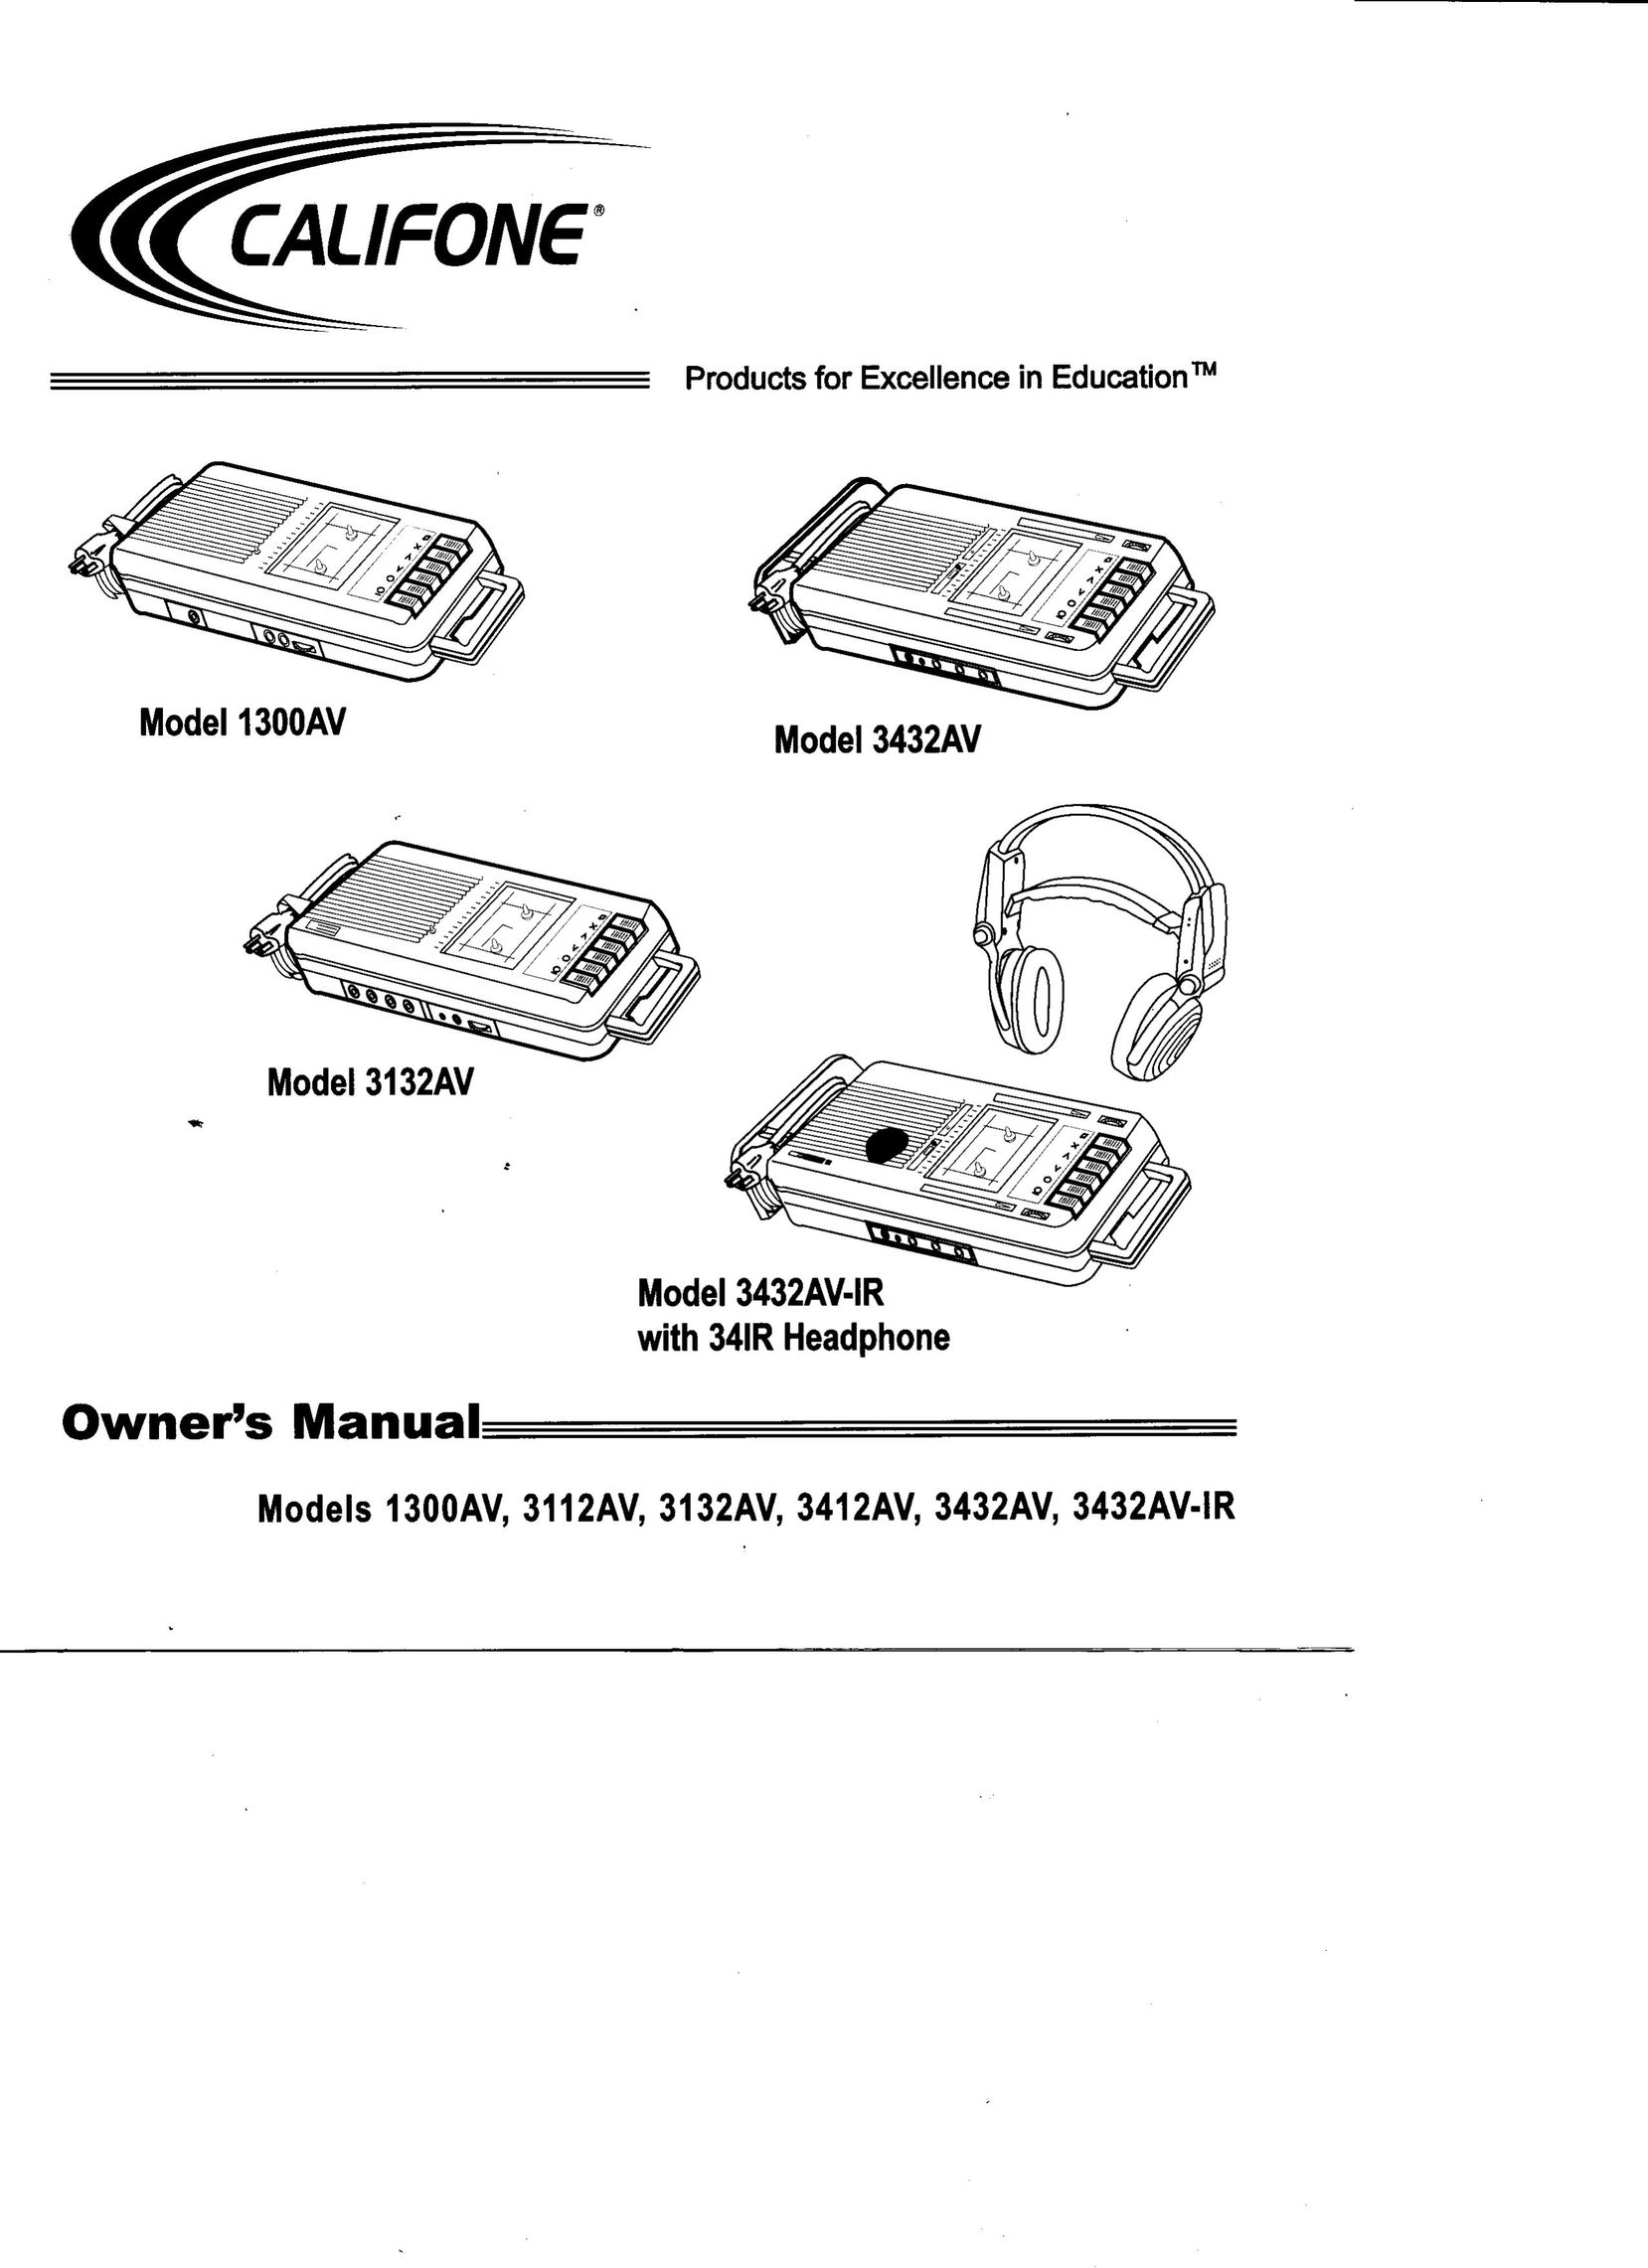 Califone 3432AVIR Cassette Player User Manual (Page 1)